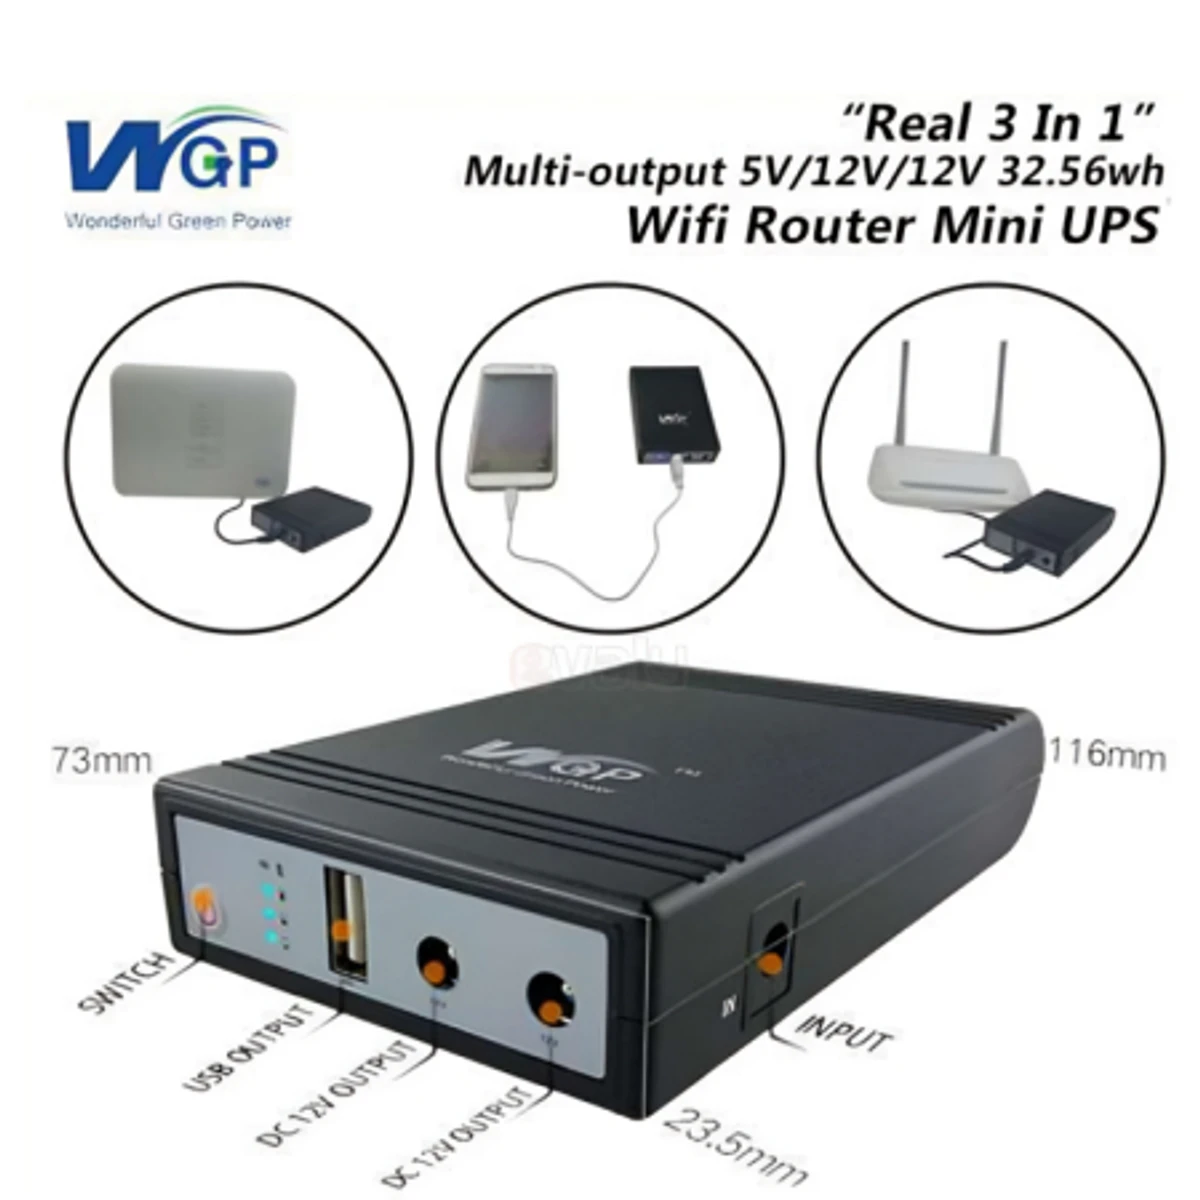 WGP Mini UPS Power Bank for Router, Onu, CCTV 5 12 12 Volt Output + Charger - Break Trend - Sleek Usage